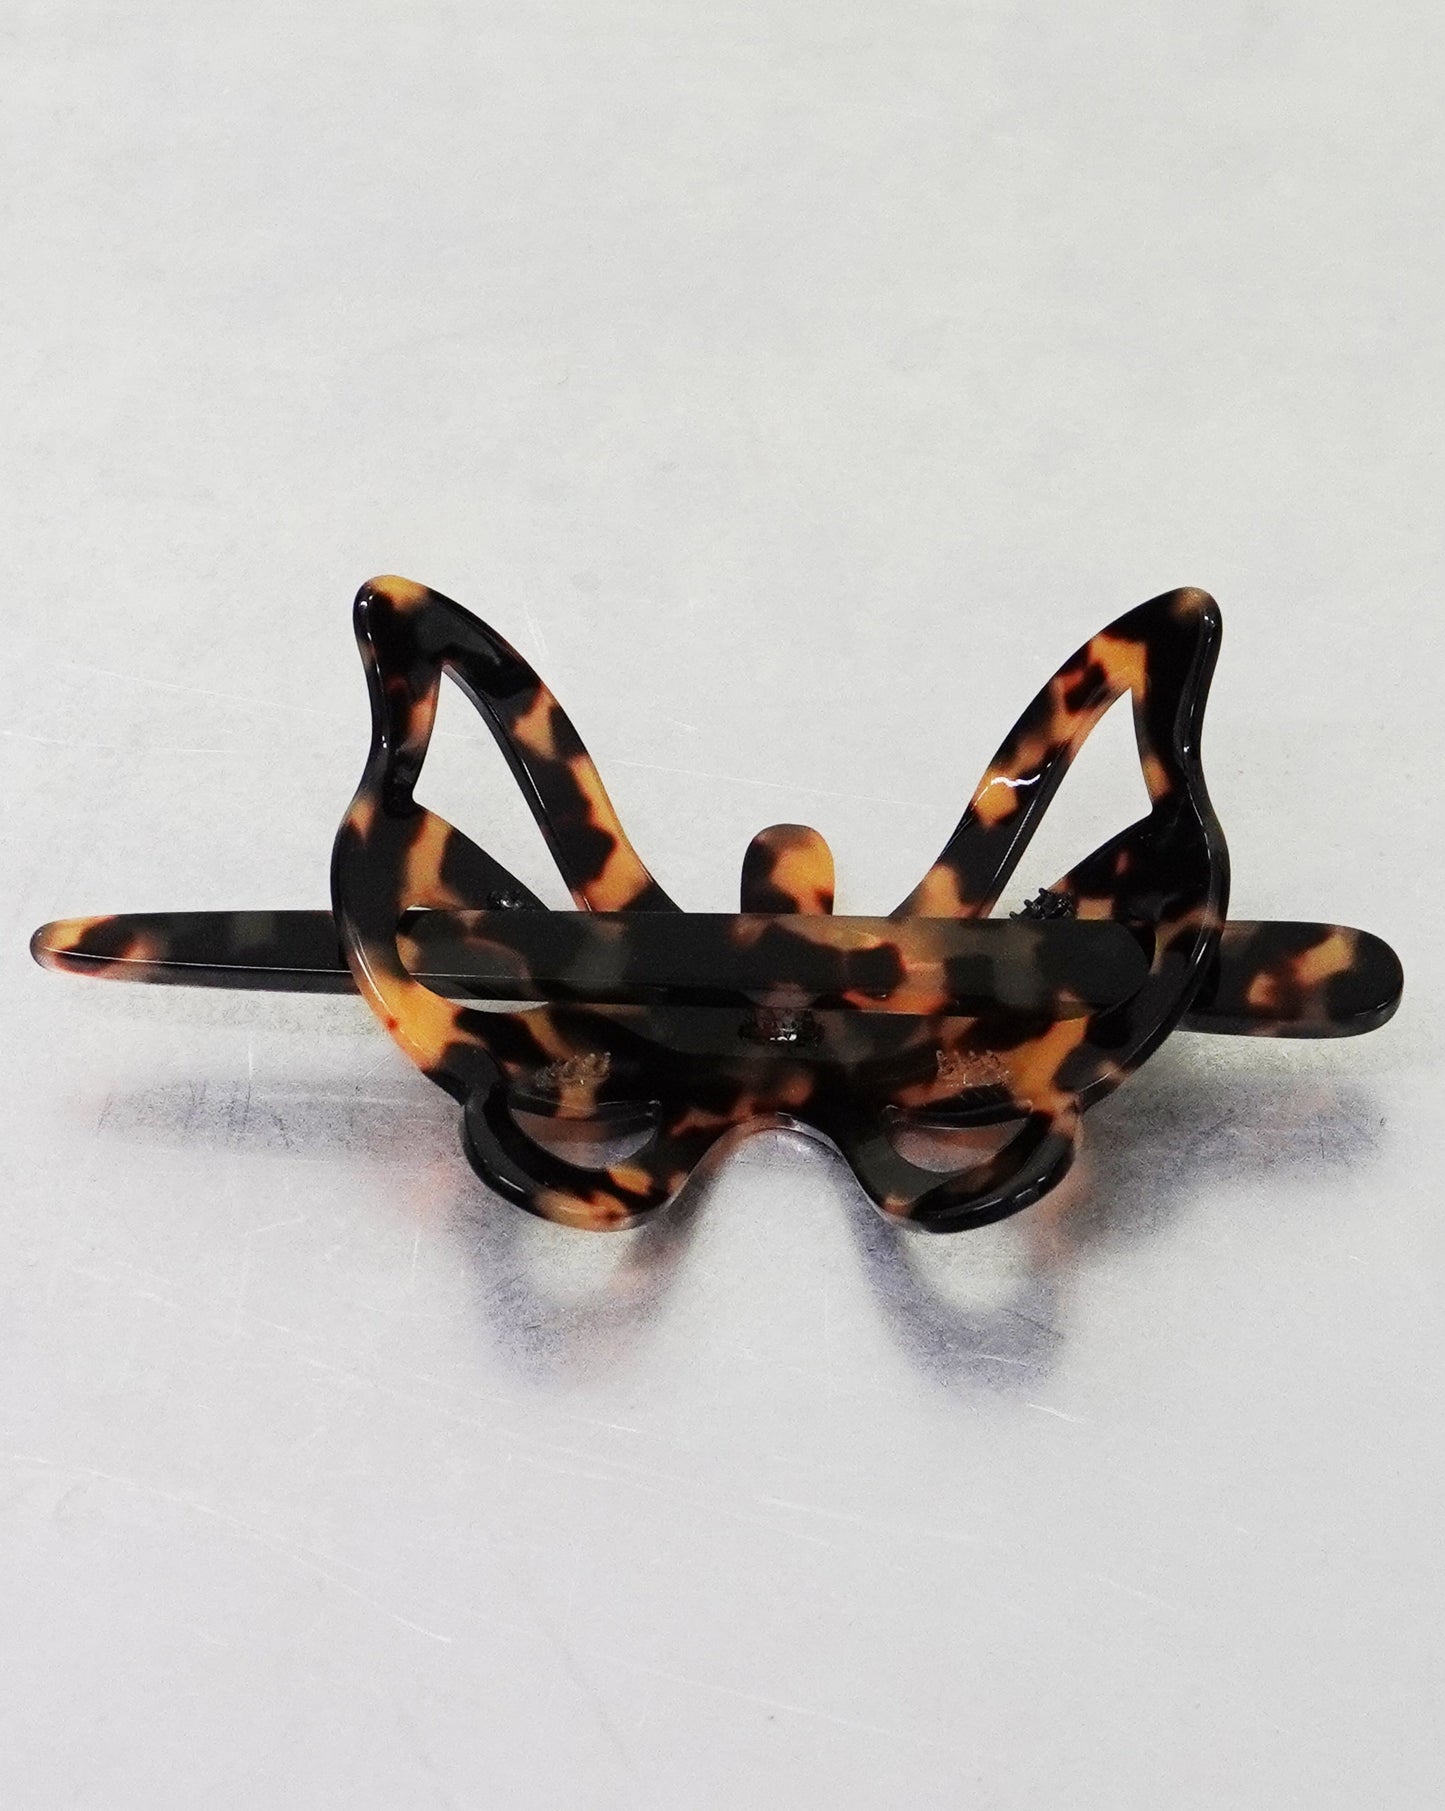 Emily Dawn Long - Tortoise Butterfly Hair Pin